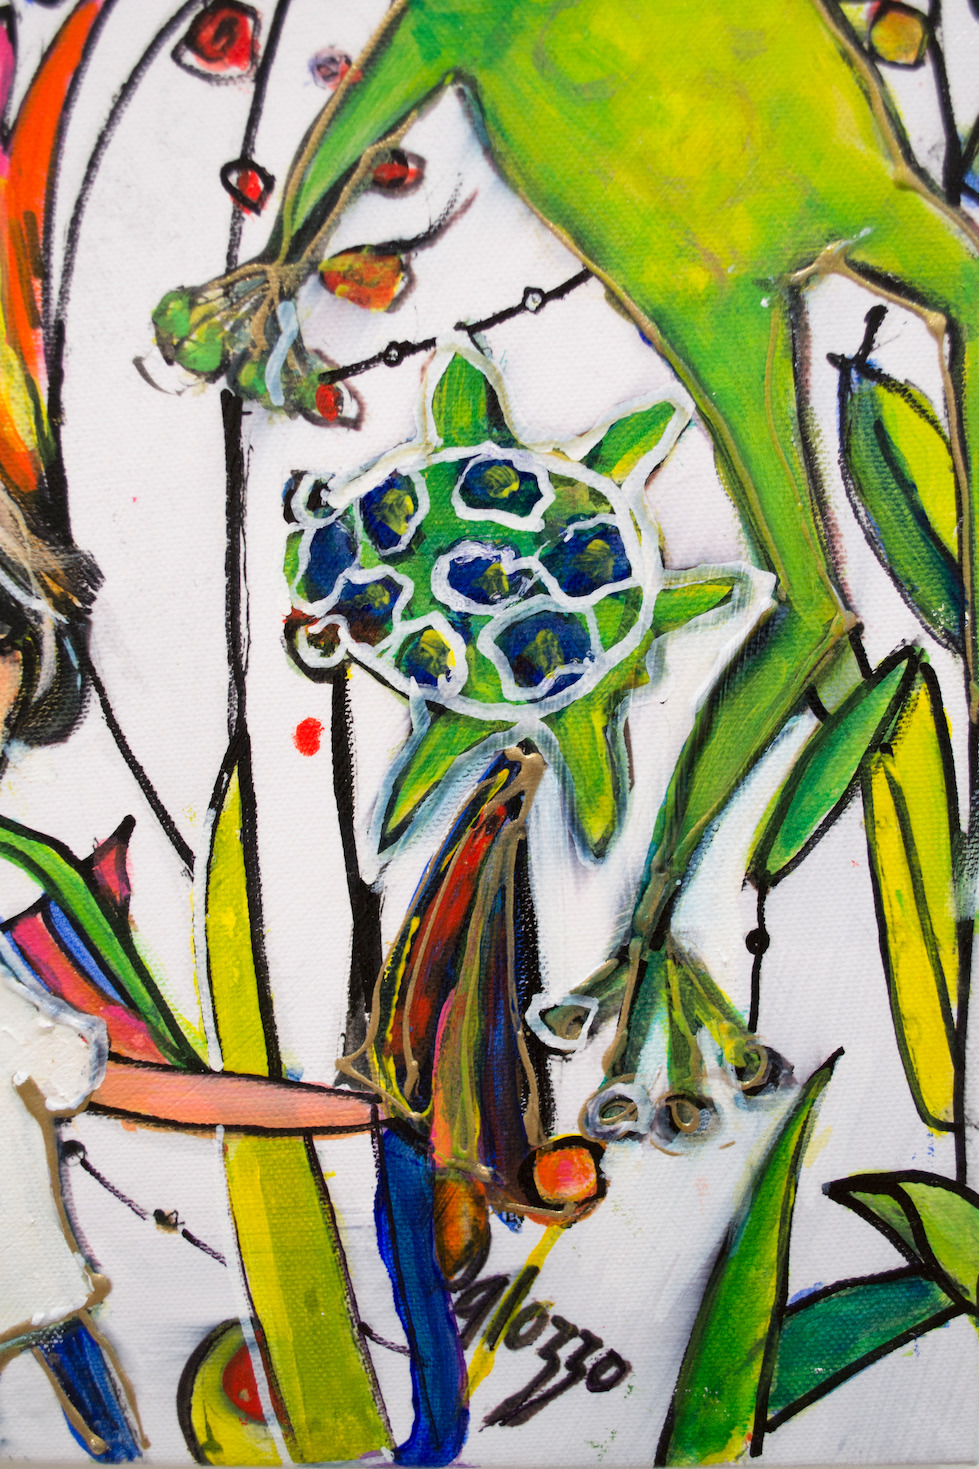 Close Up Signature Of Acrylic Painting "Ainsi Va La Vie Study Rainforest Walk" By Lucette Dalozzo